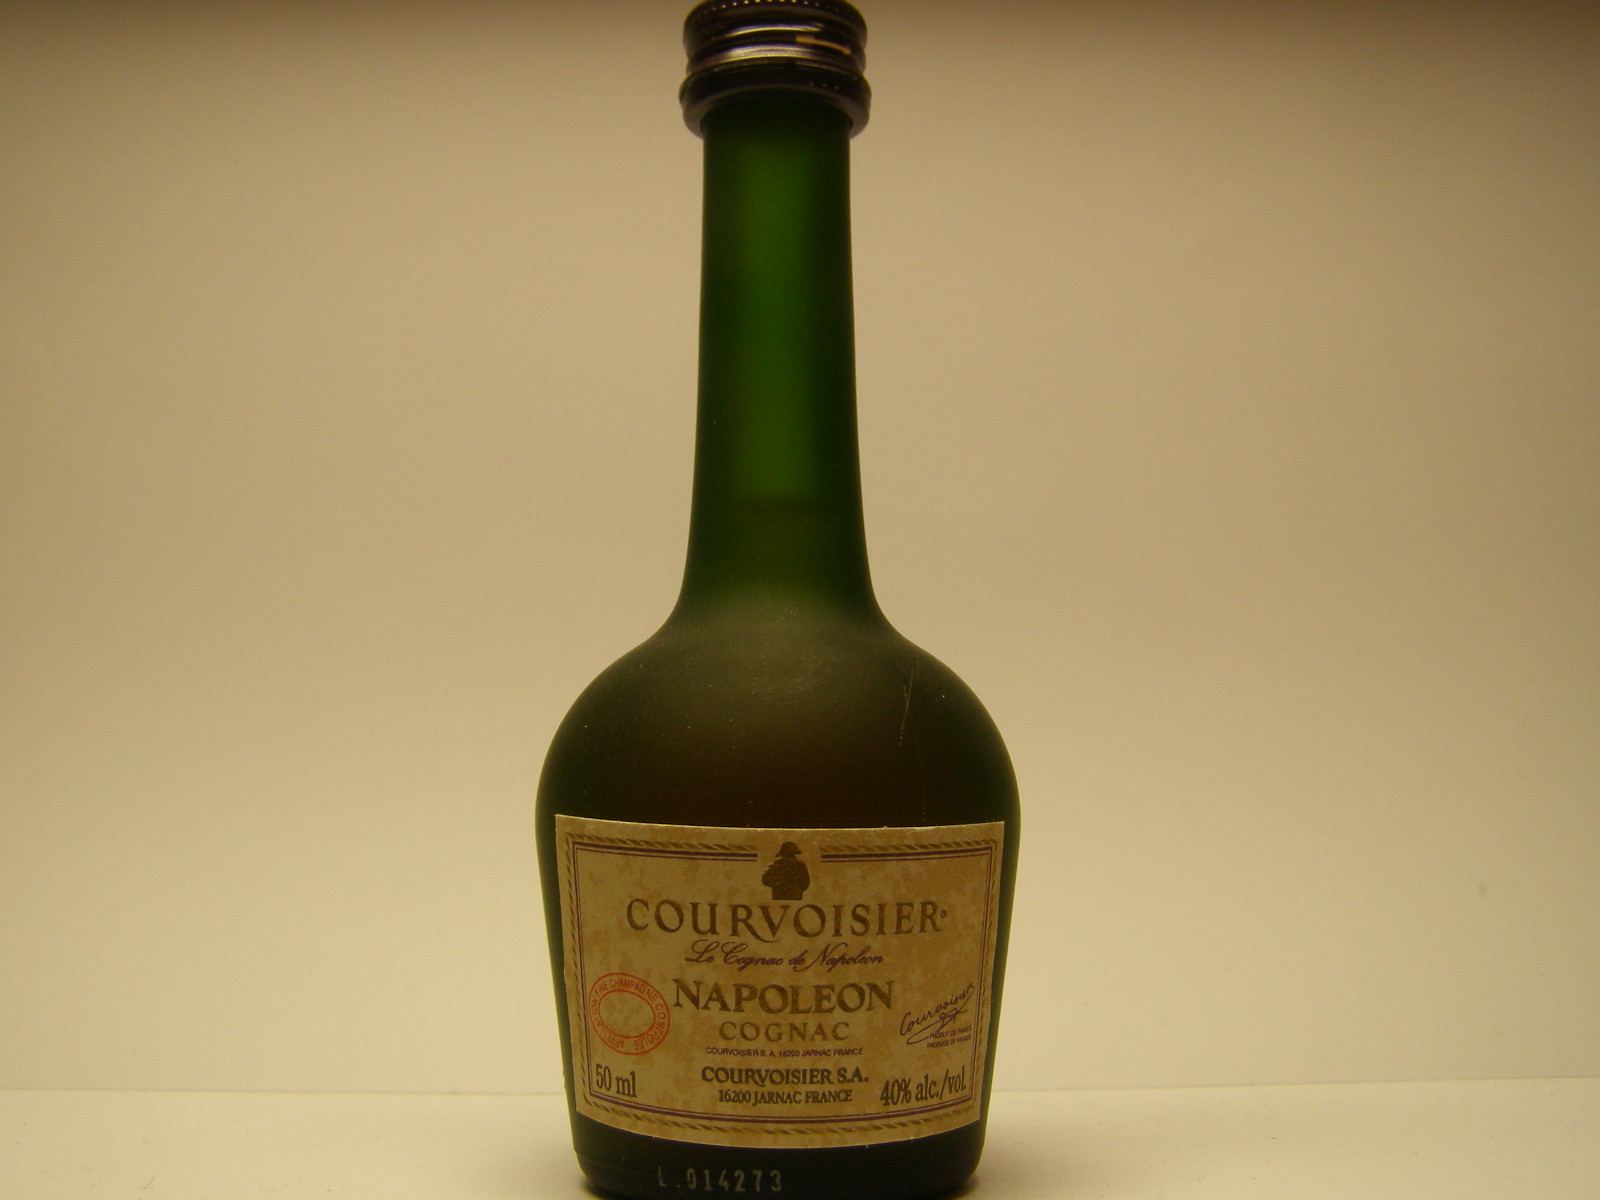 Napoleon Cognac